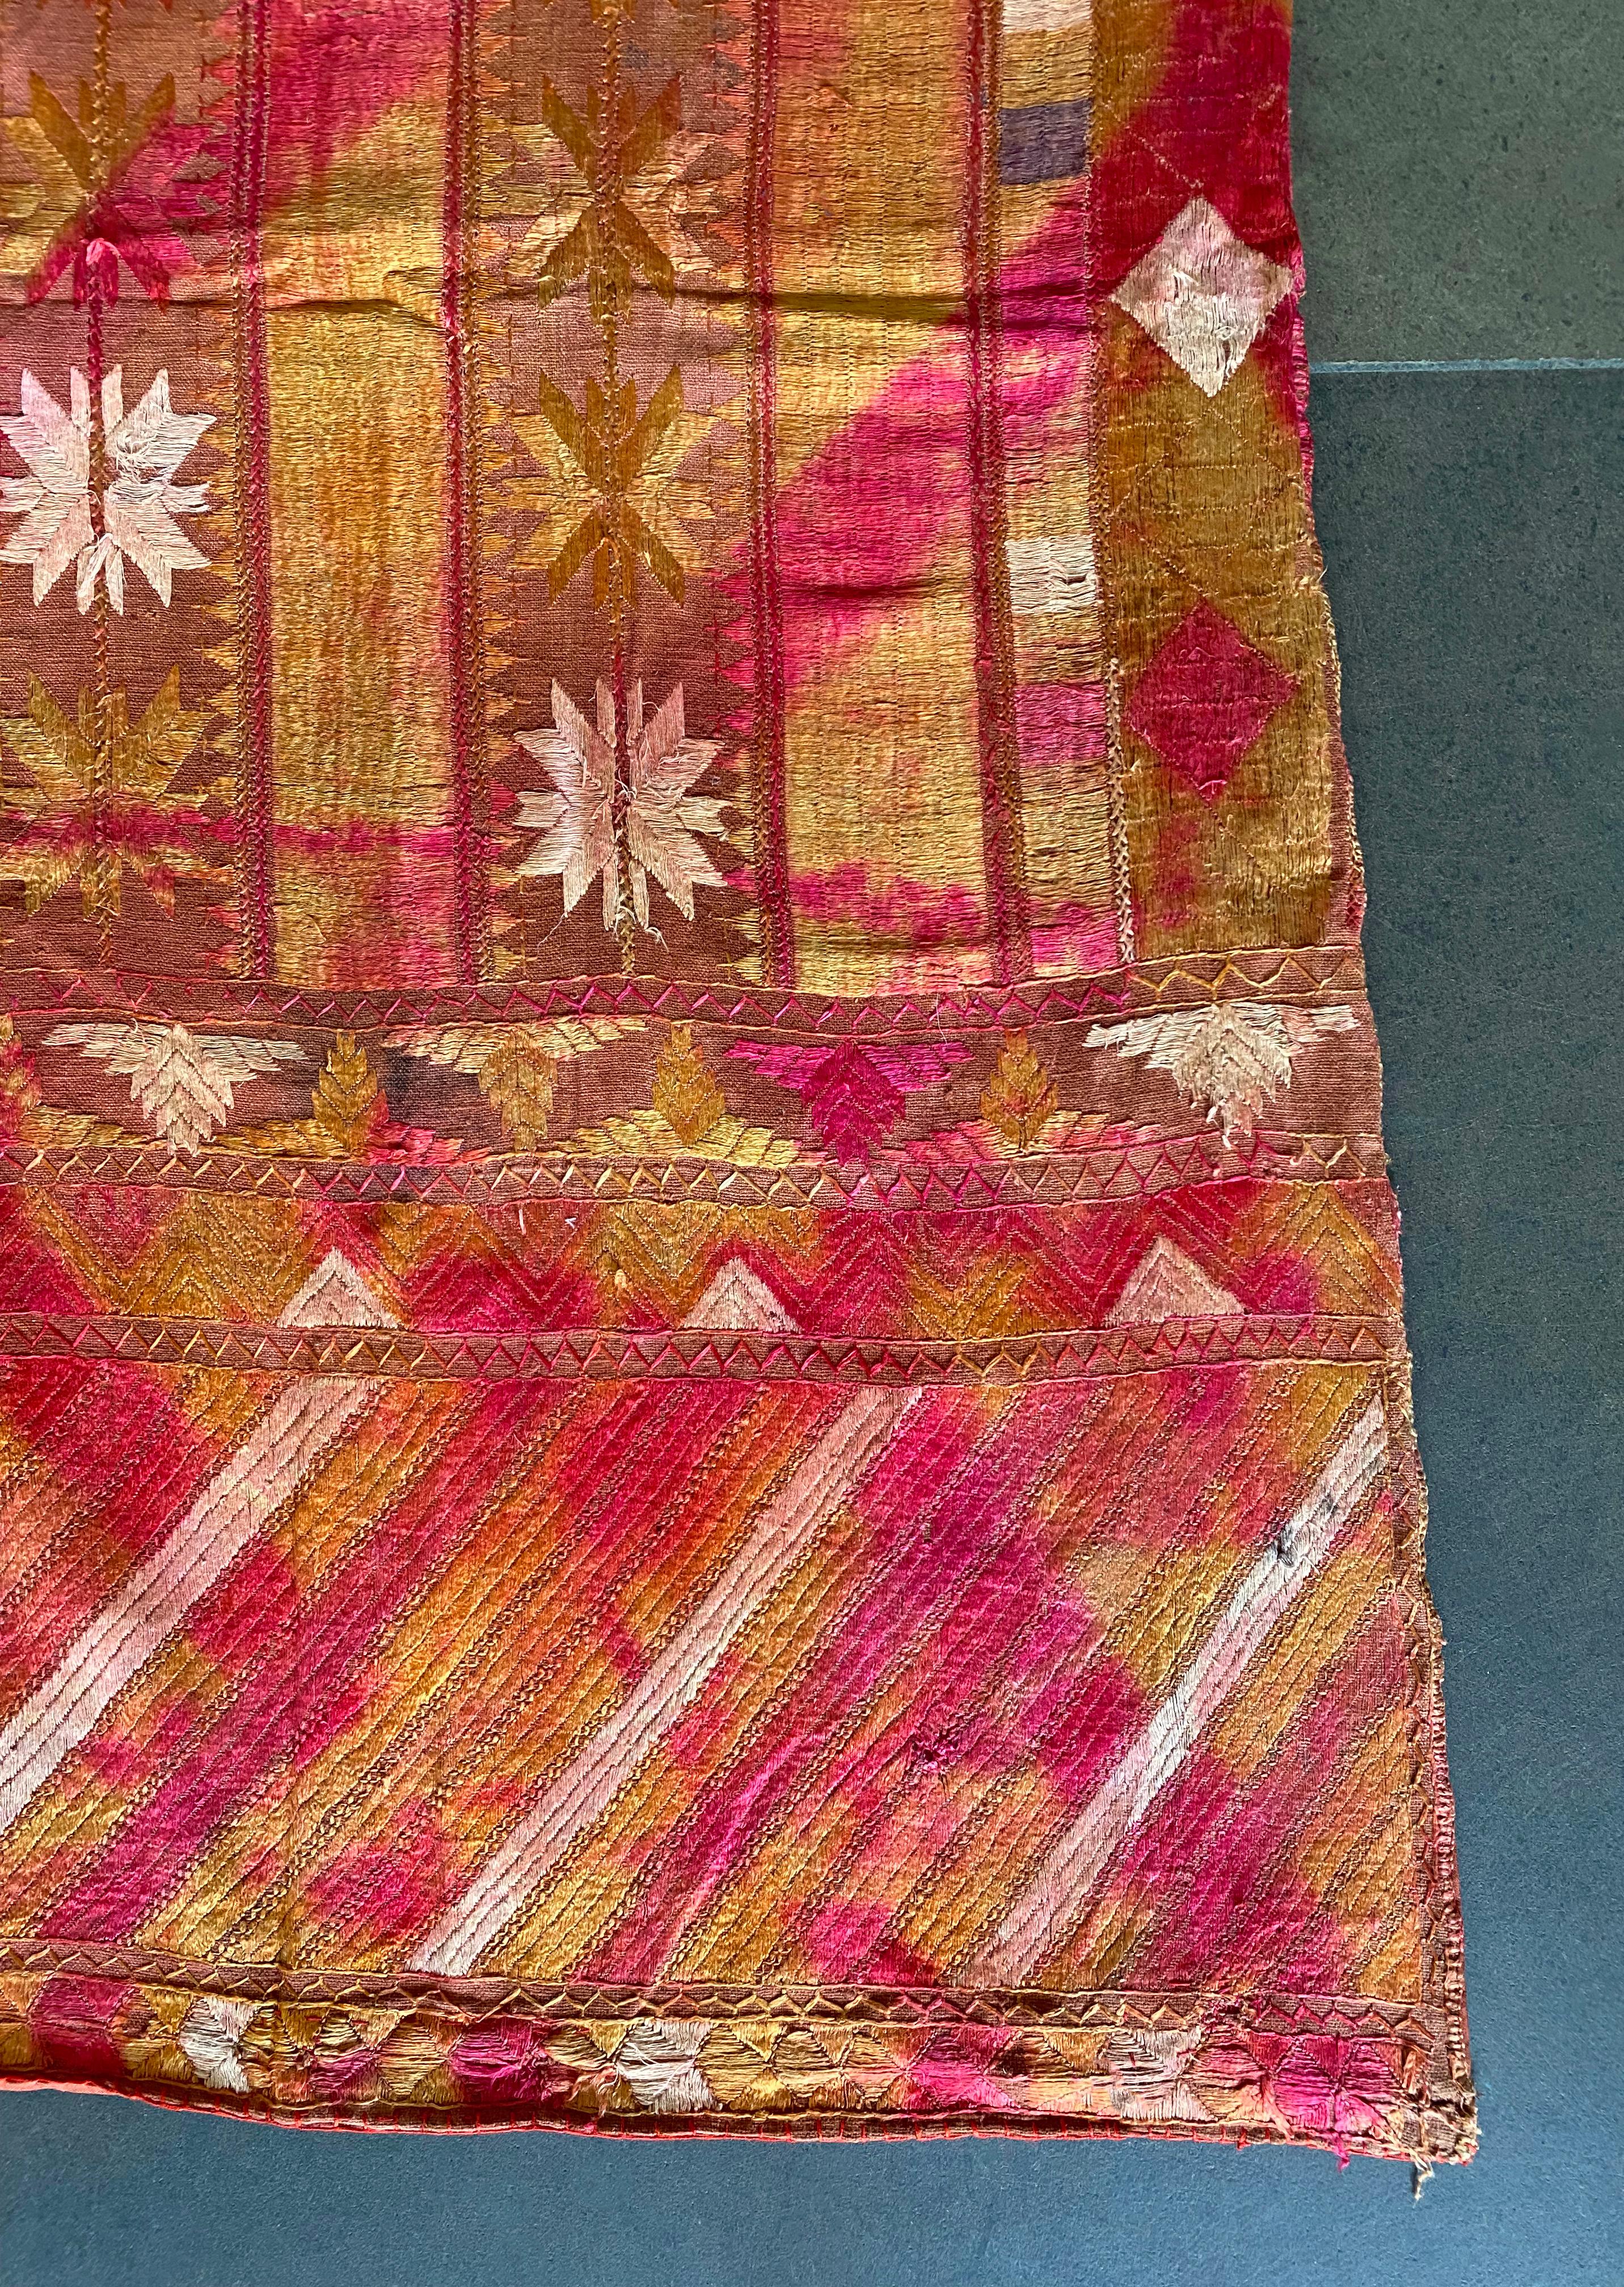 Other Indian Phulkari Wedding Textile, Silk & Cotton Embroidery, Punjab 1900s For Sale